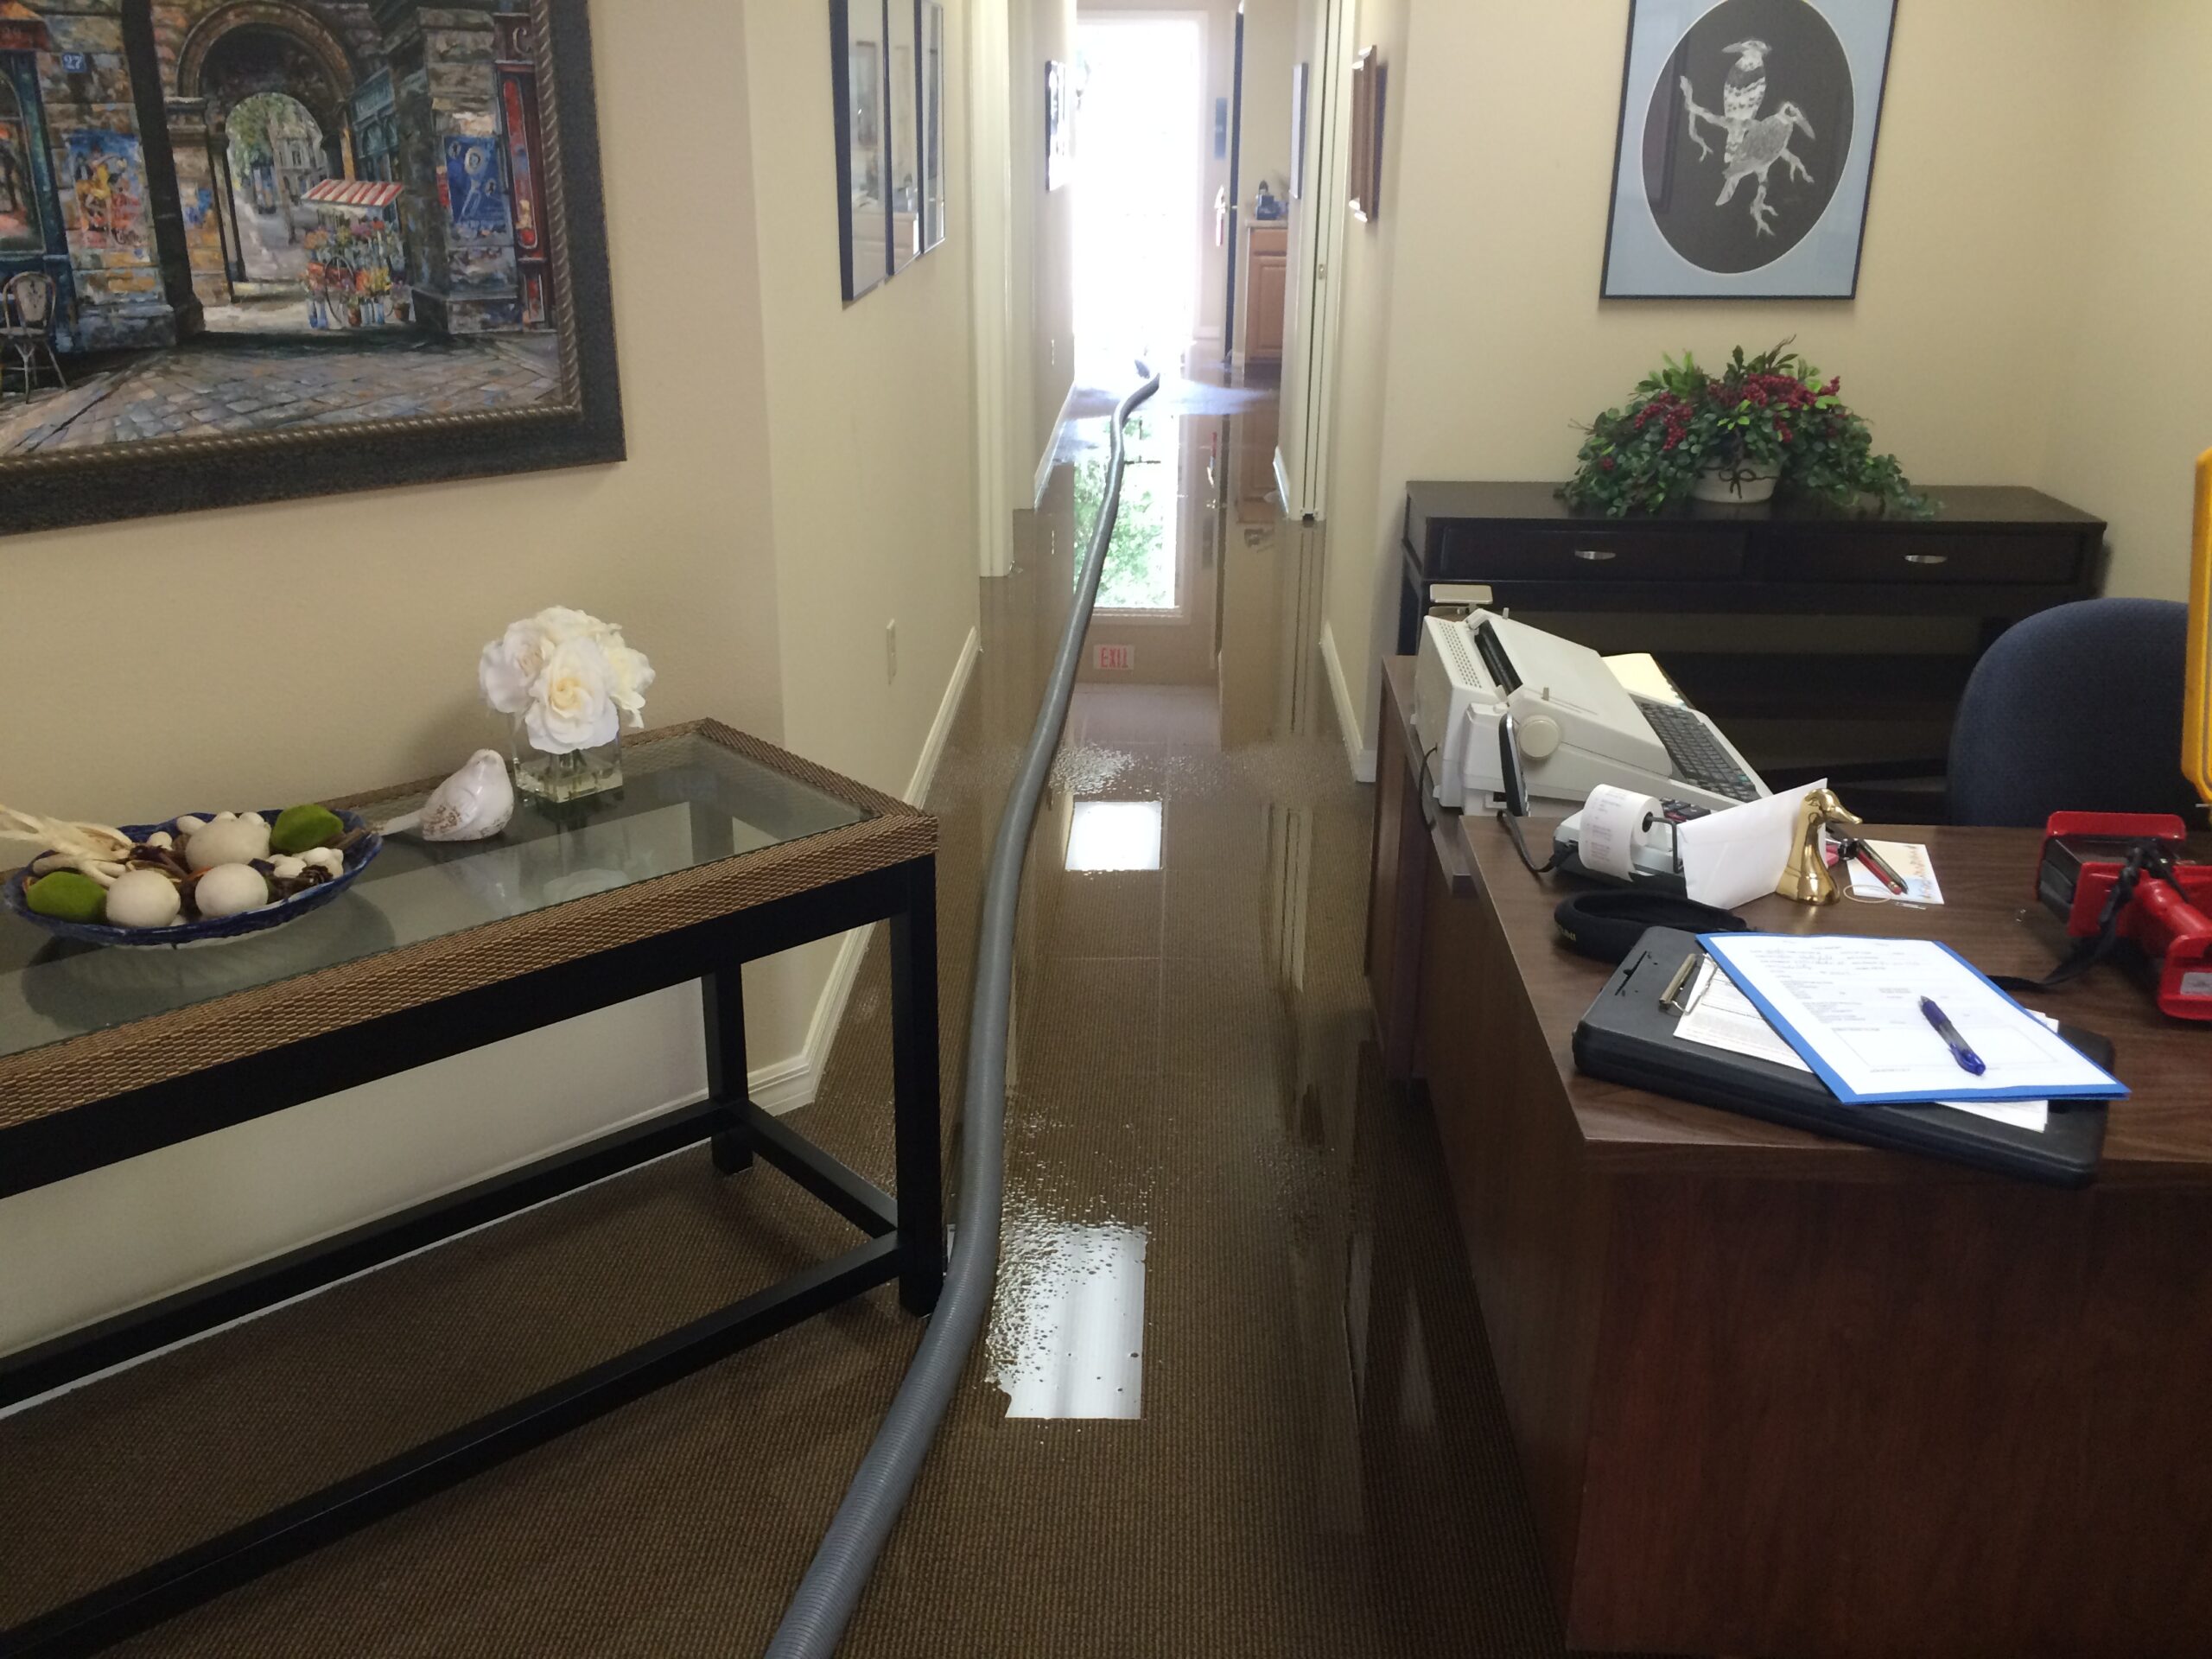 water damage in hallway, preventing water damage